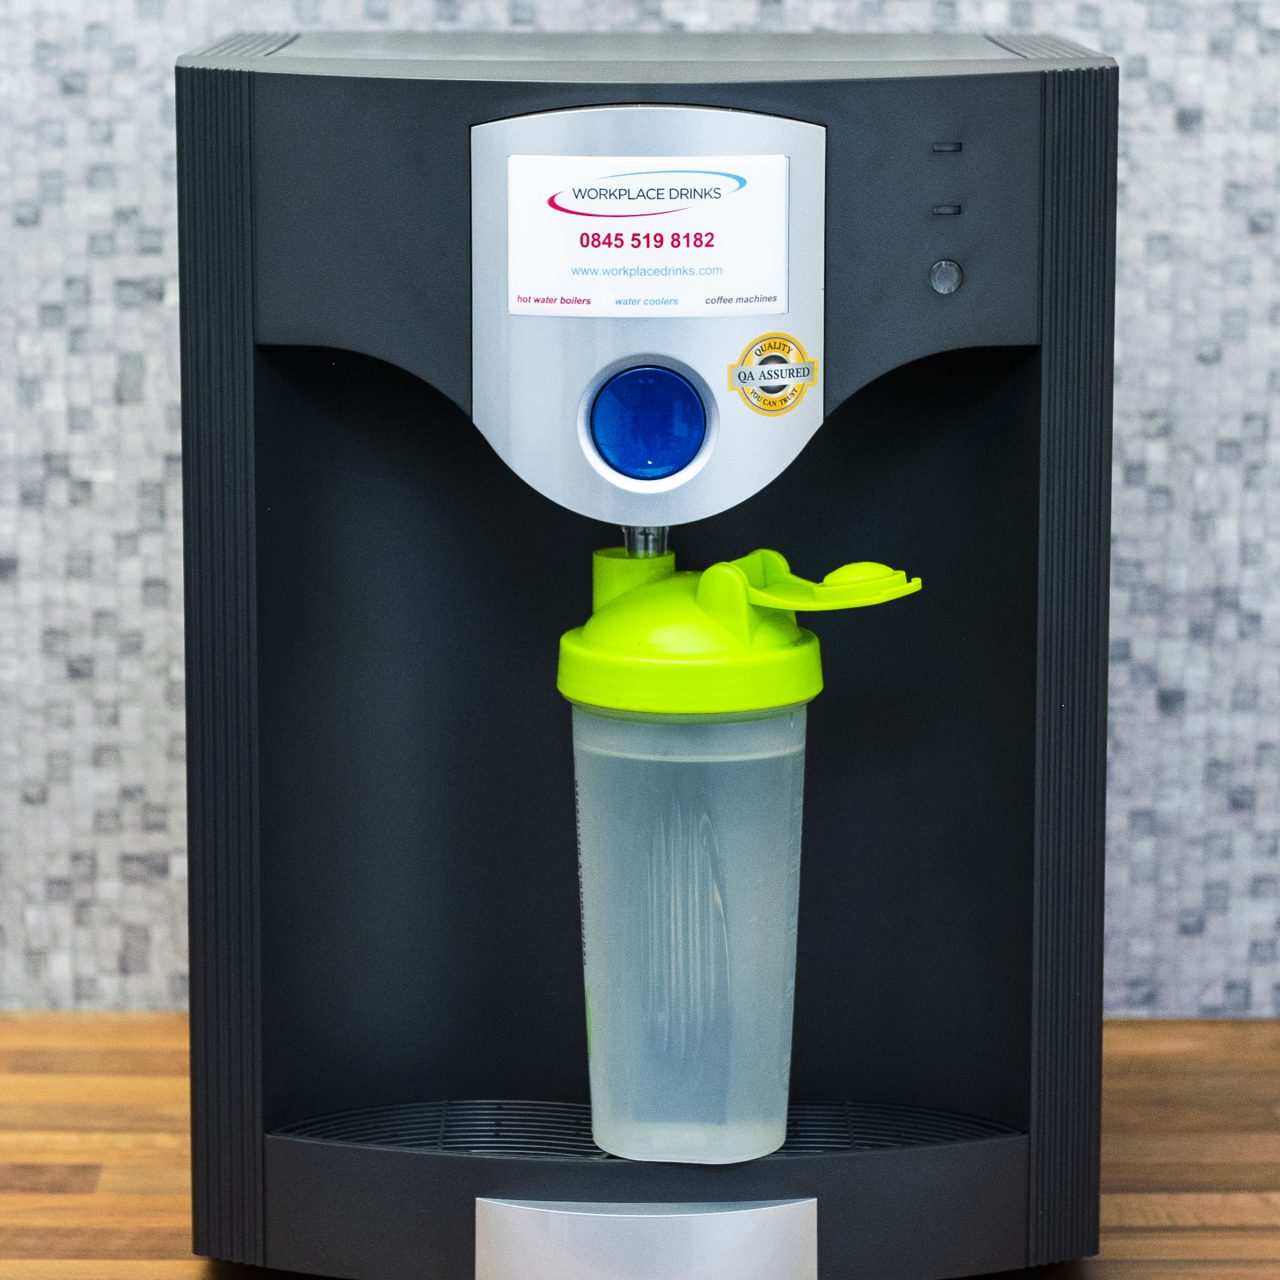 Office Water Cooler Rental- Workplace Drinks